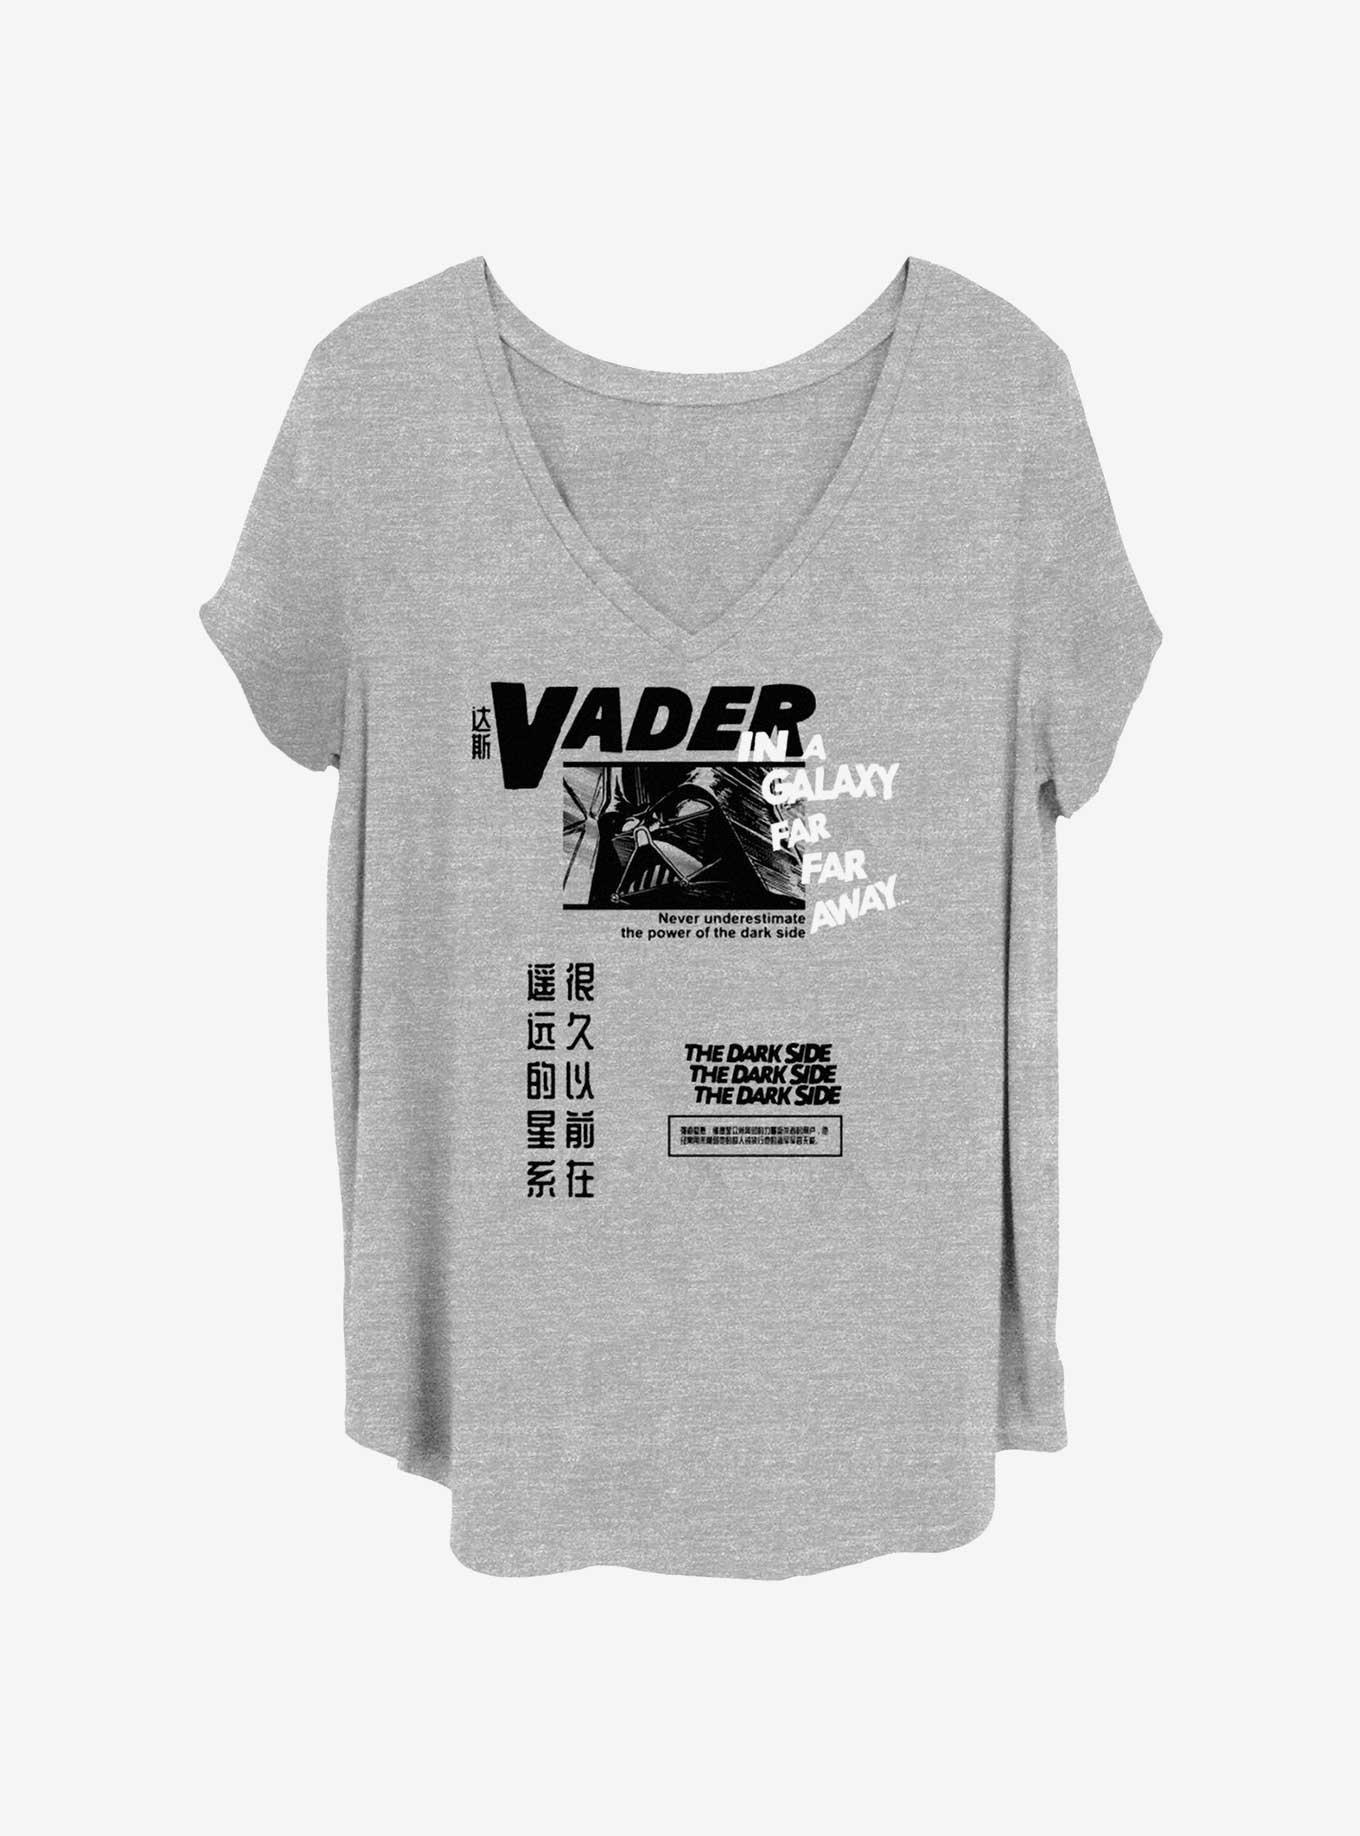 Star Wars The Dark Side Poster Girls T-Shirt Plus